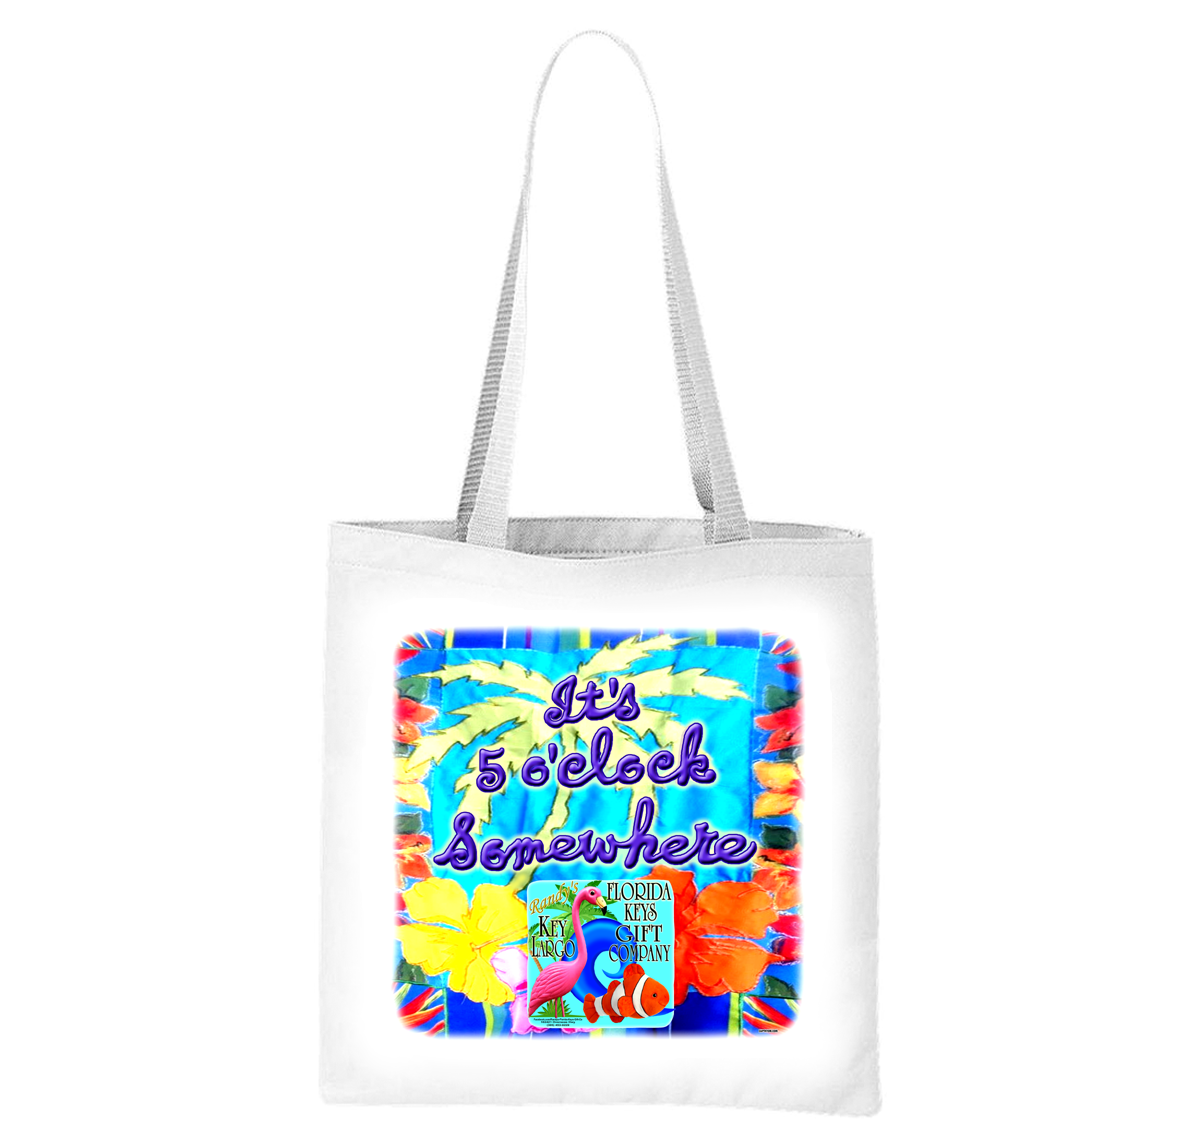 Randy’s Florida Keys Gift Company - It’s 5 O’Clock Somewhere Liberty Bag